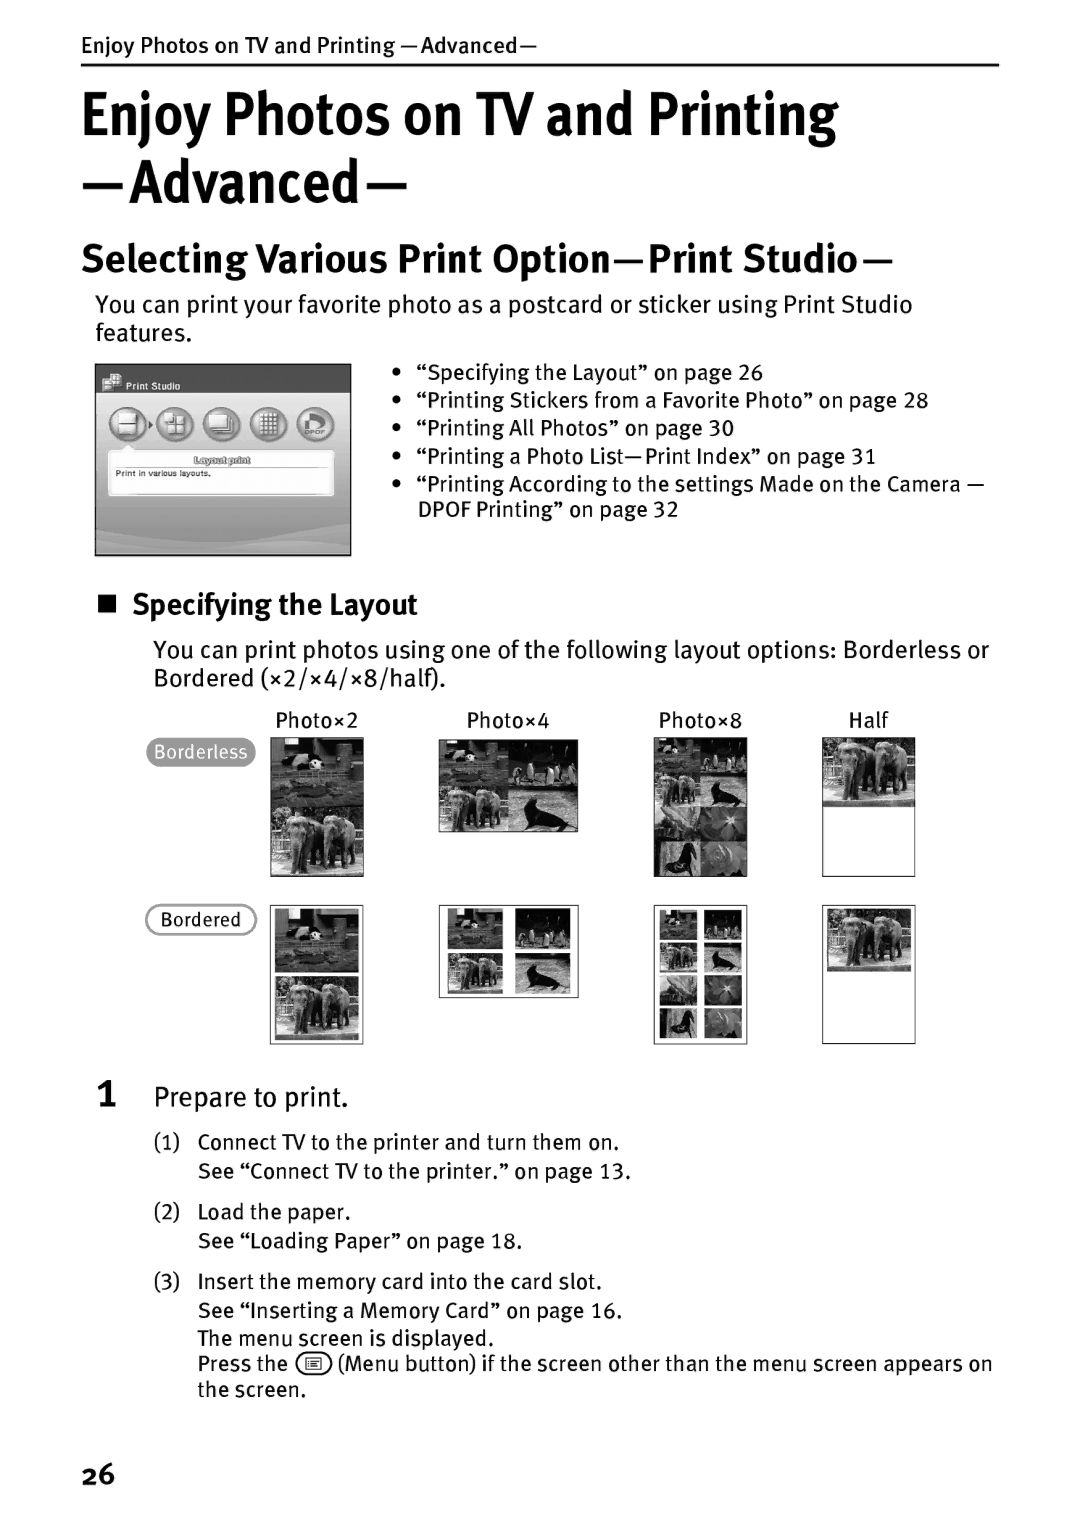 Canon DS700 manual Enjoy Photos on TV and Printing -Advanced, Selecting Various Print Option-Print Studio 